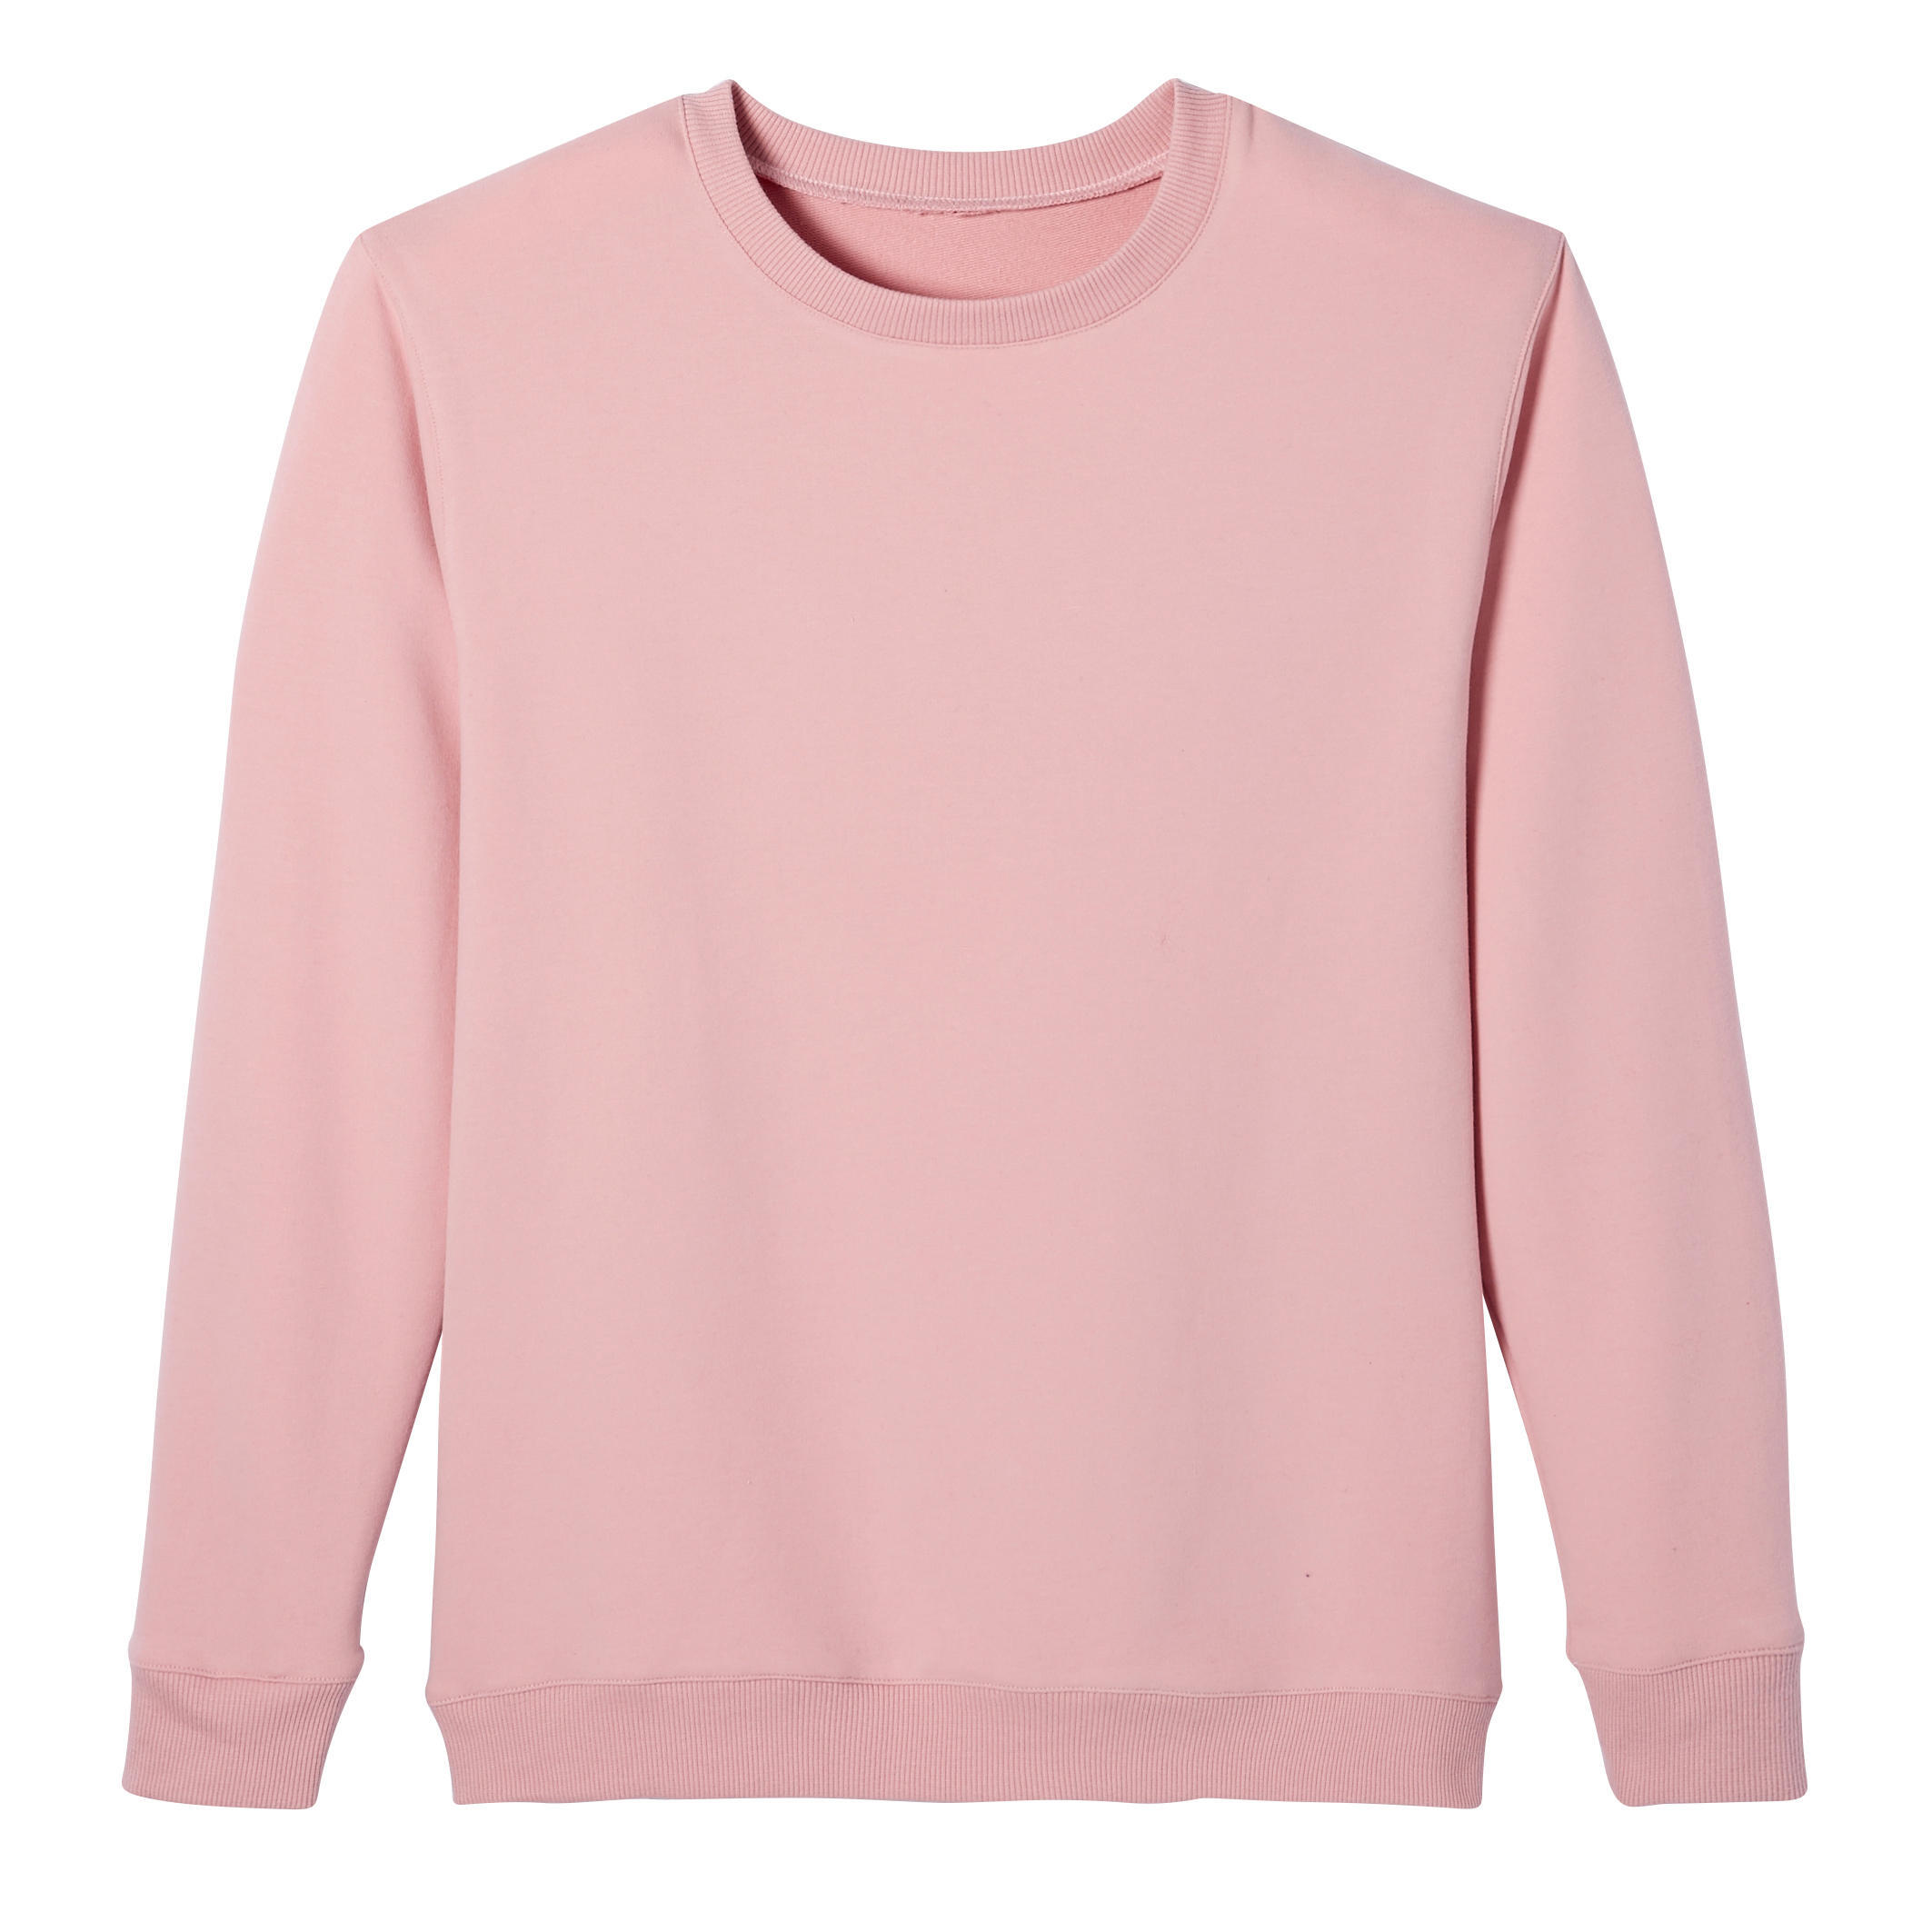 Refurbished Womens Fitness Sweatshirt 100-Pink - A Grade 1/6